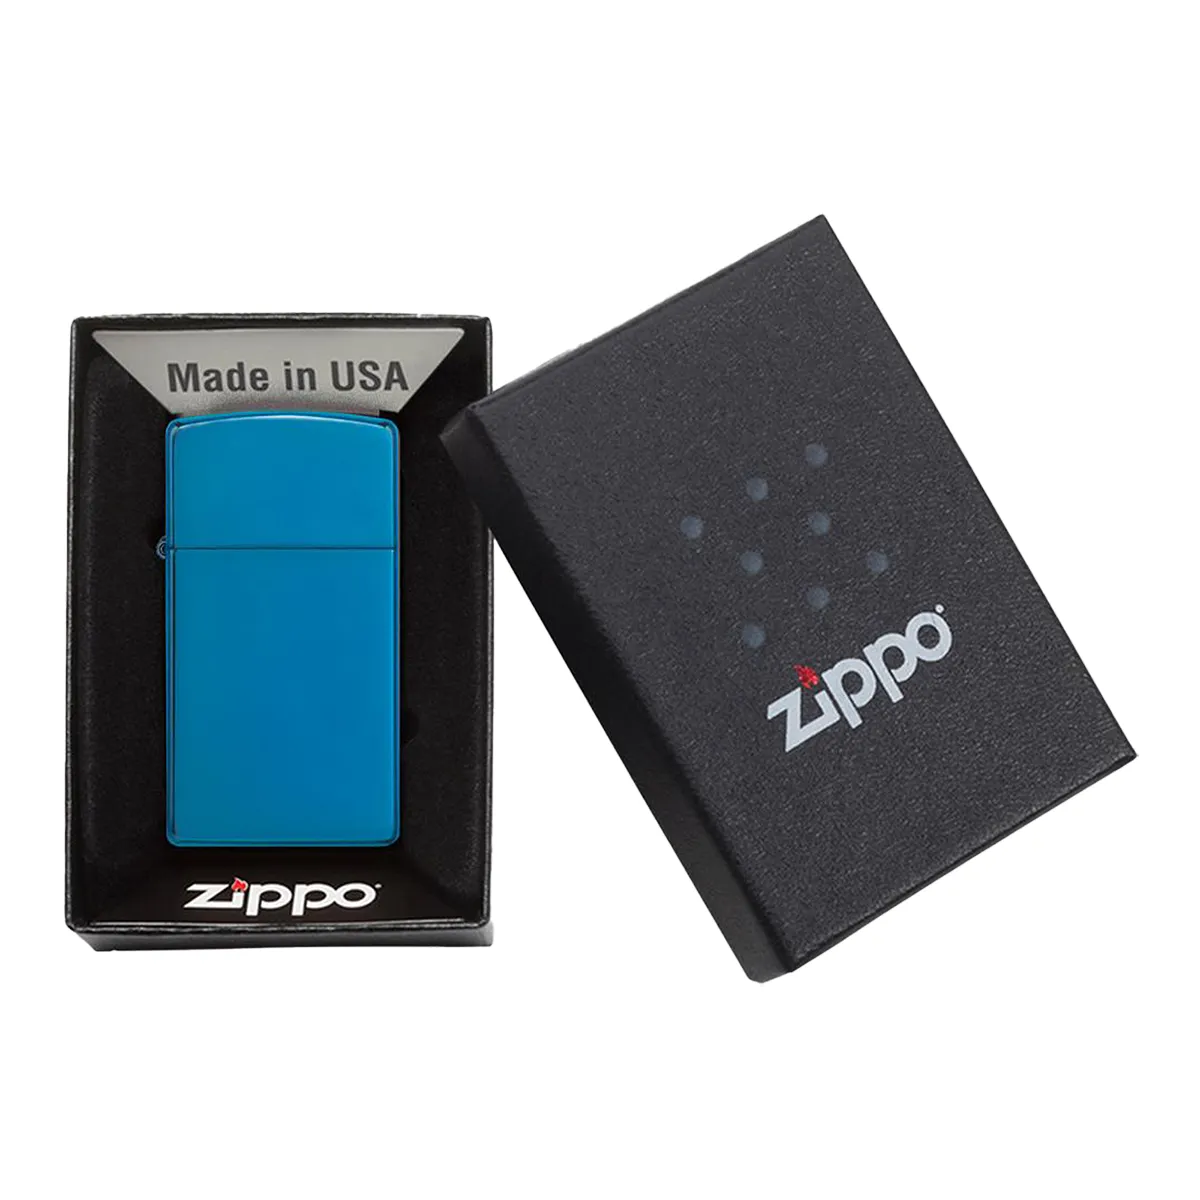 Zippo Slim Sapphire Feuerzeug mit original Verpackung